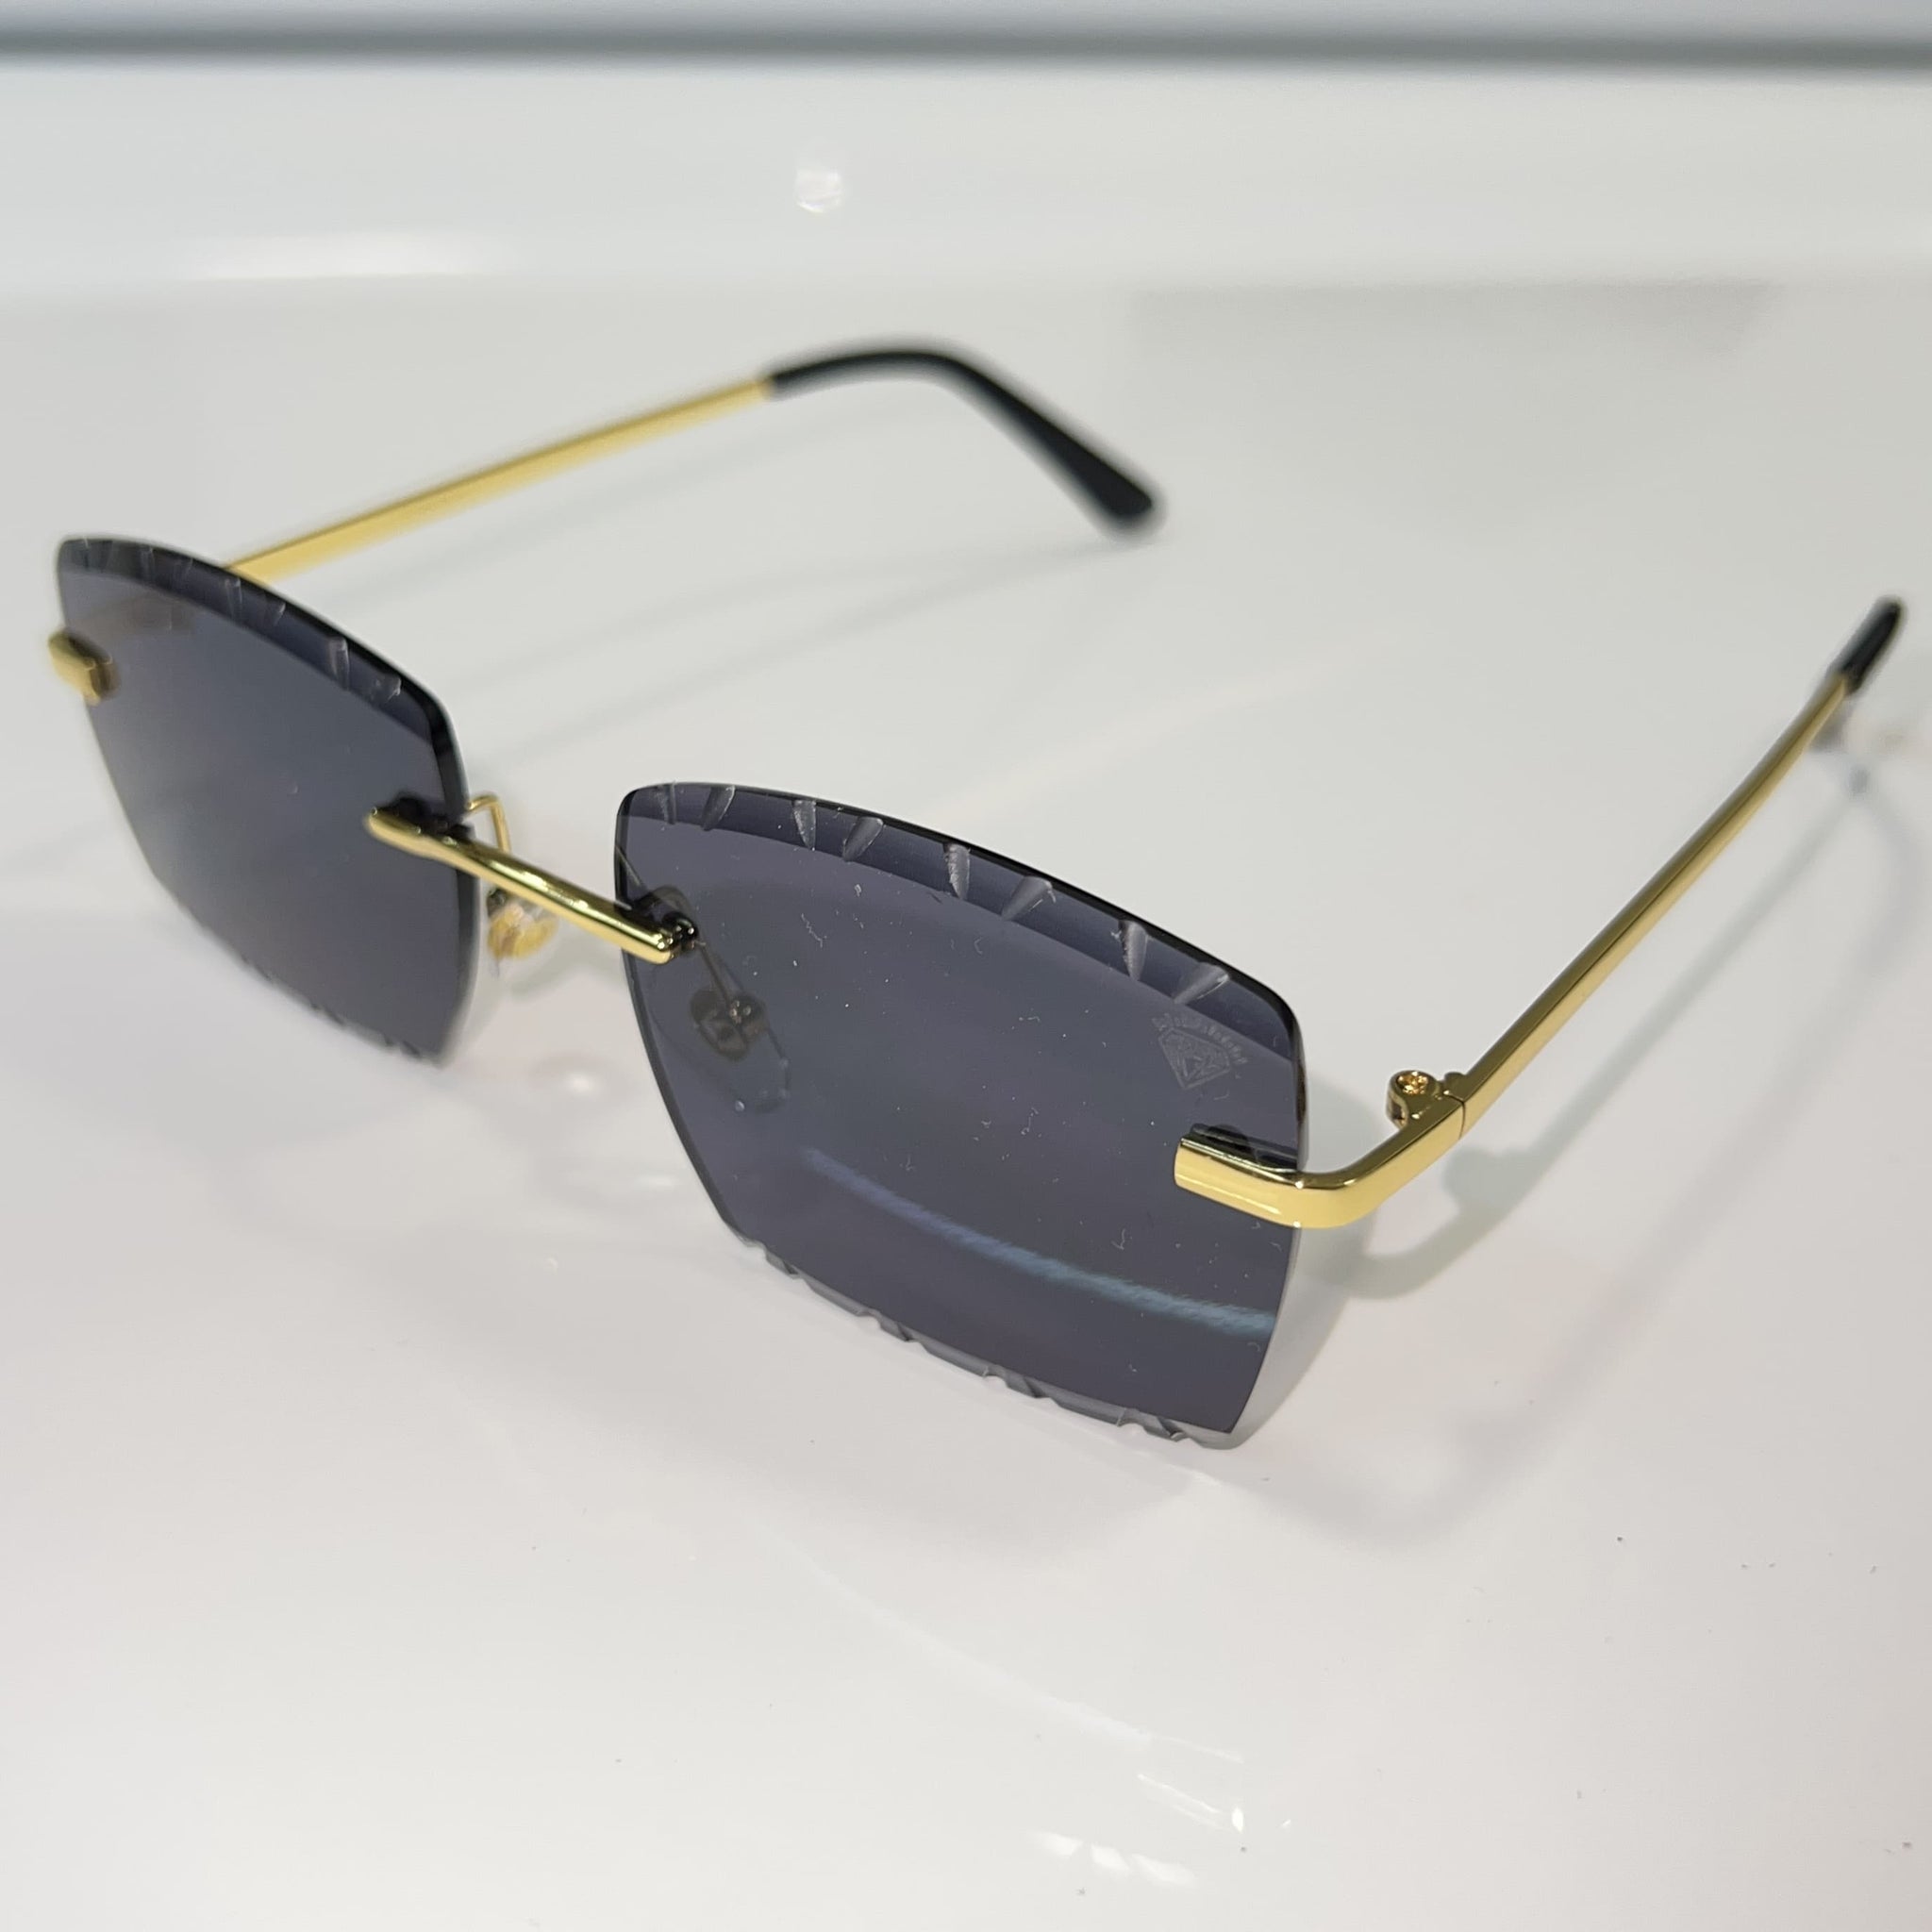 Dripcut Glasses - 14k gold plated - Black Shade - Sehgal Glasses